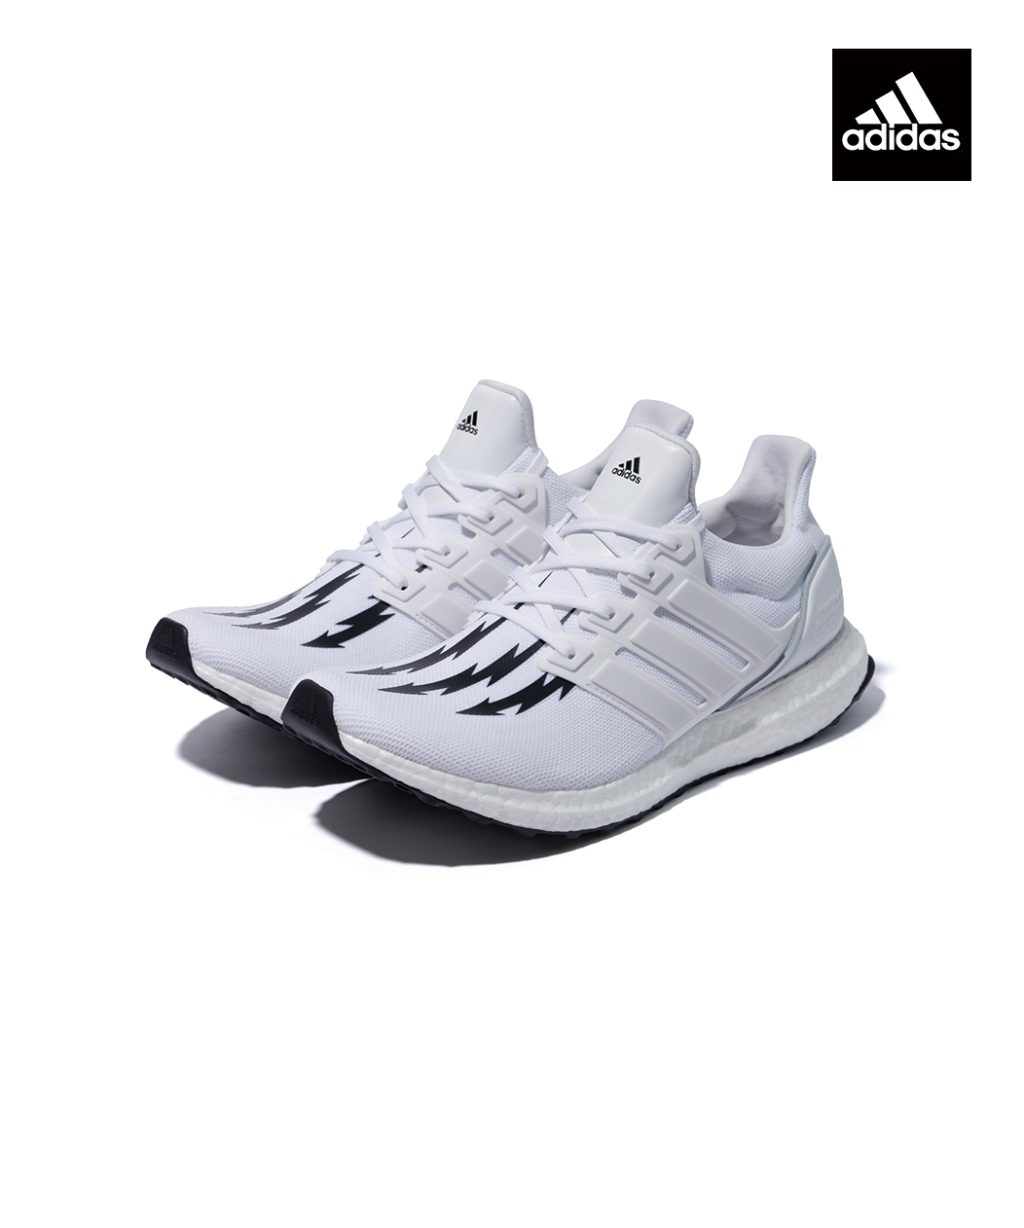 neighborhood-adidas-ultra-boost-black-white-release-20190427